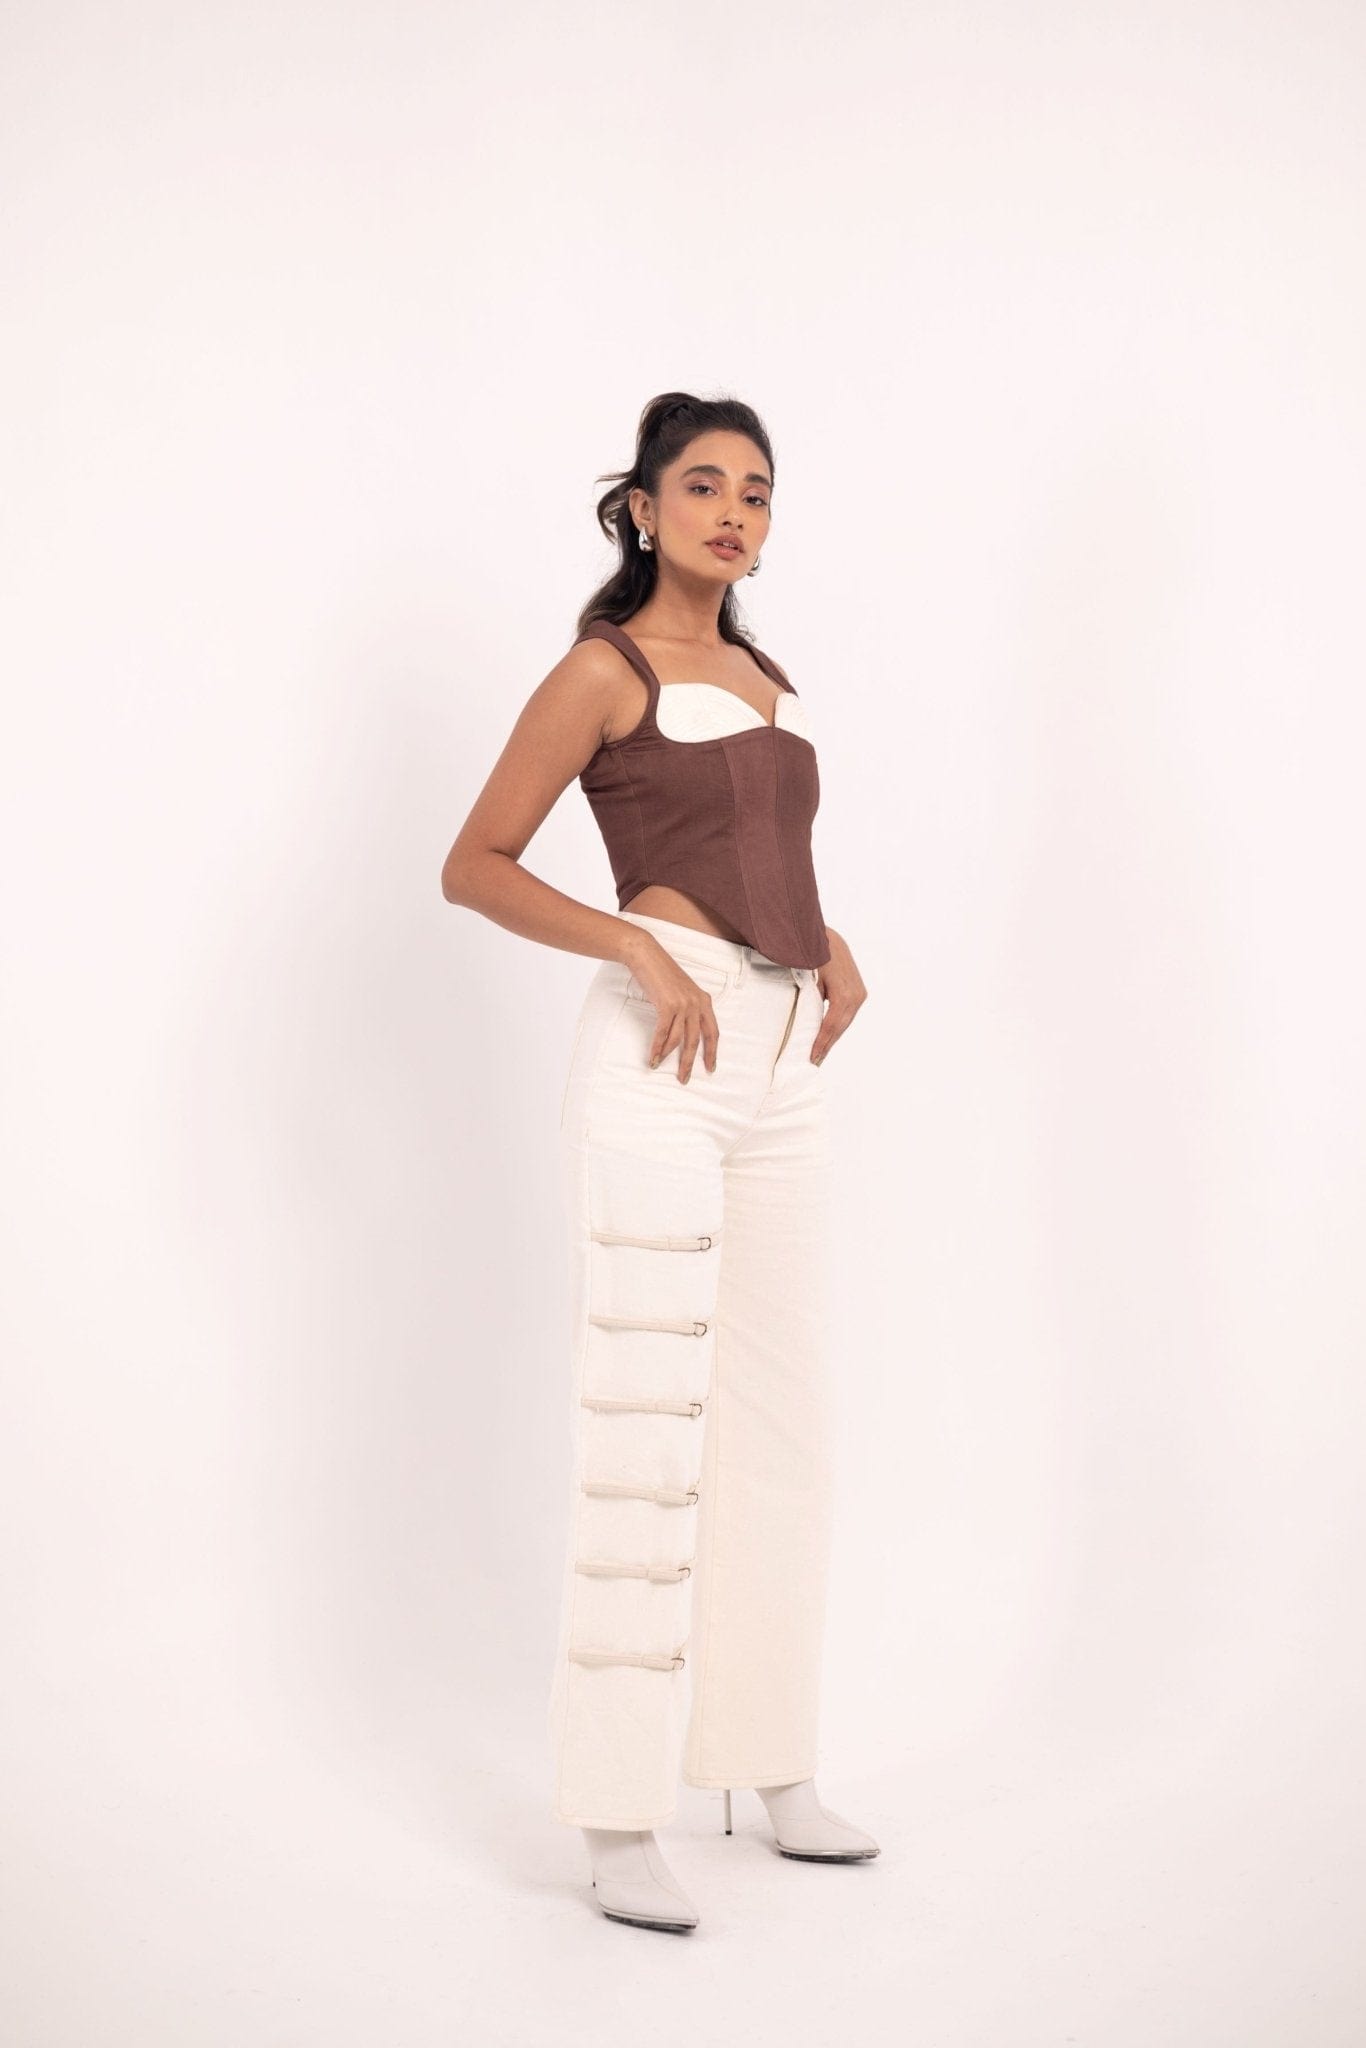 Osé Studios Clothing Mocha swirl corset